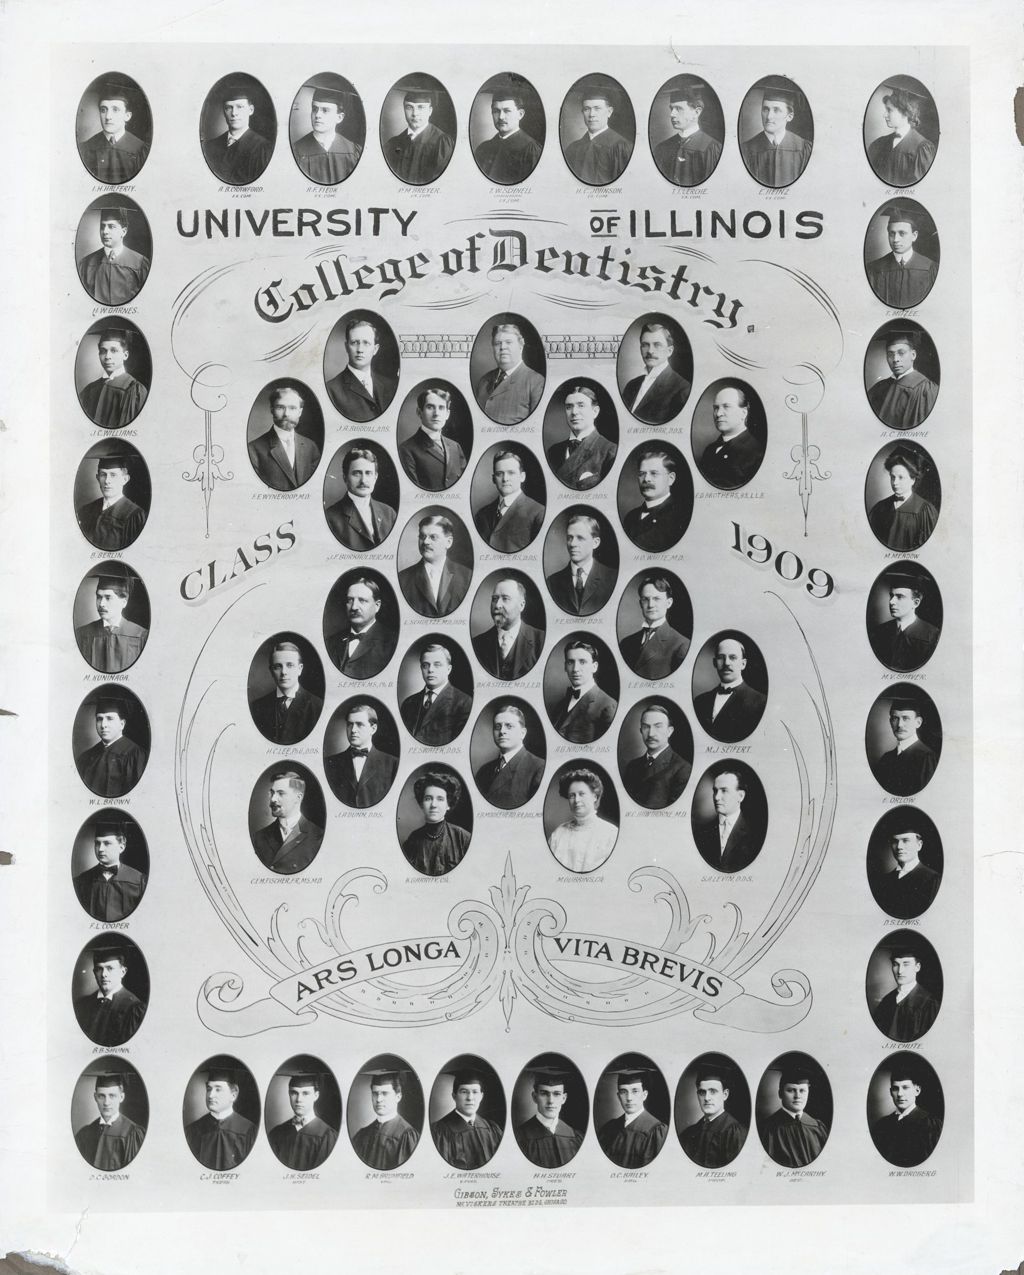 1909 graduating class, University of Illinois College of Dentistry